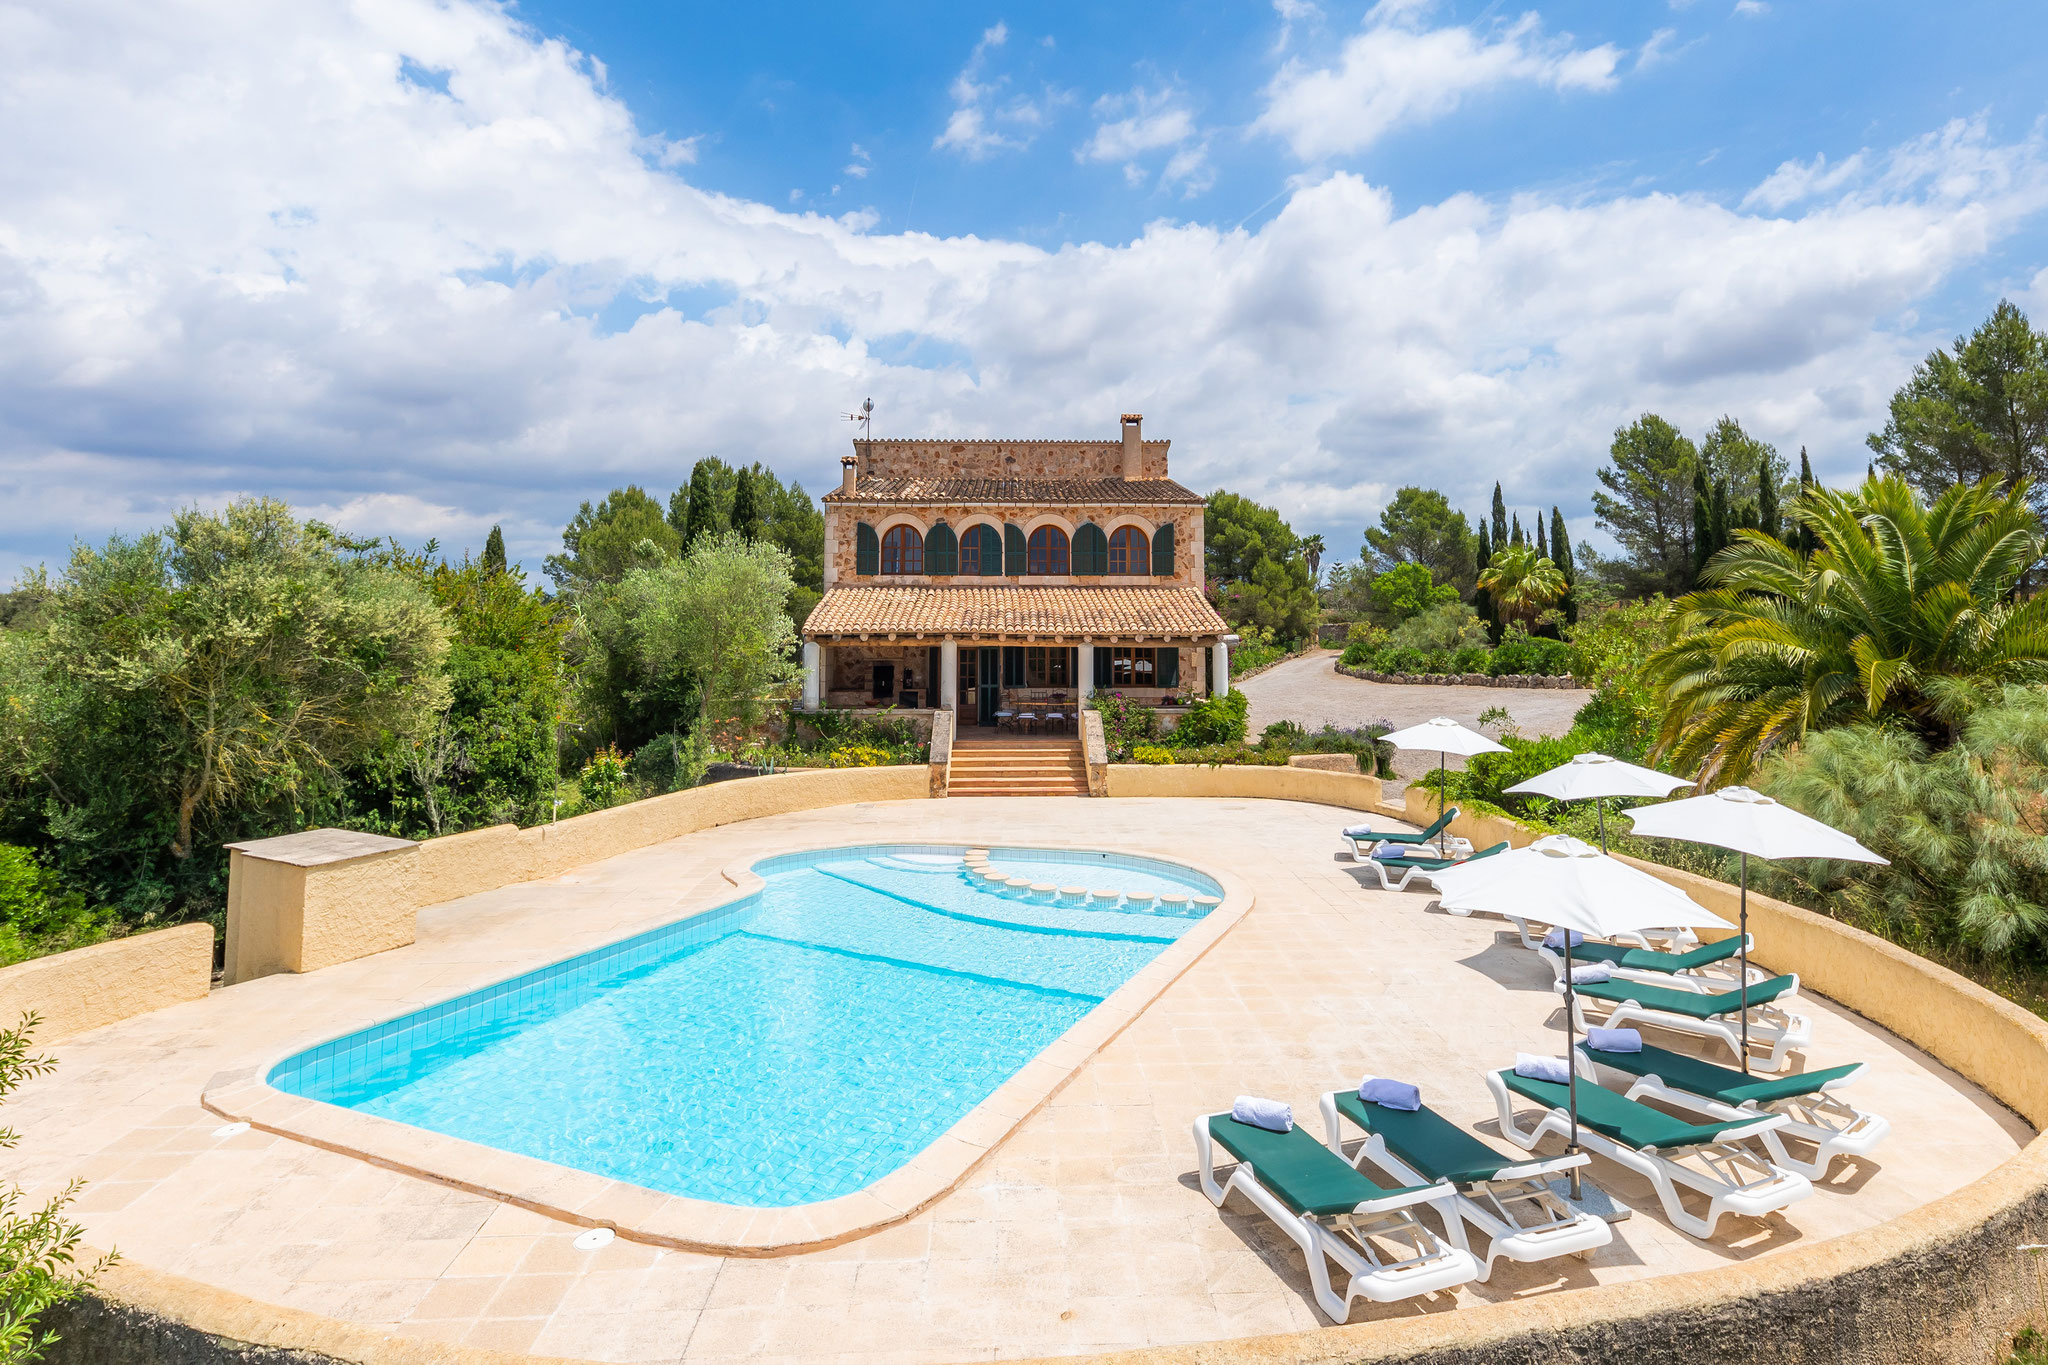 Spacious villa with pool